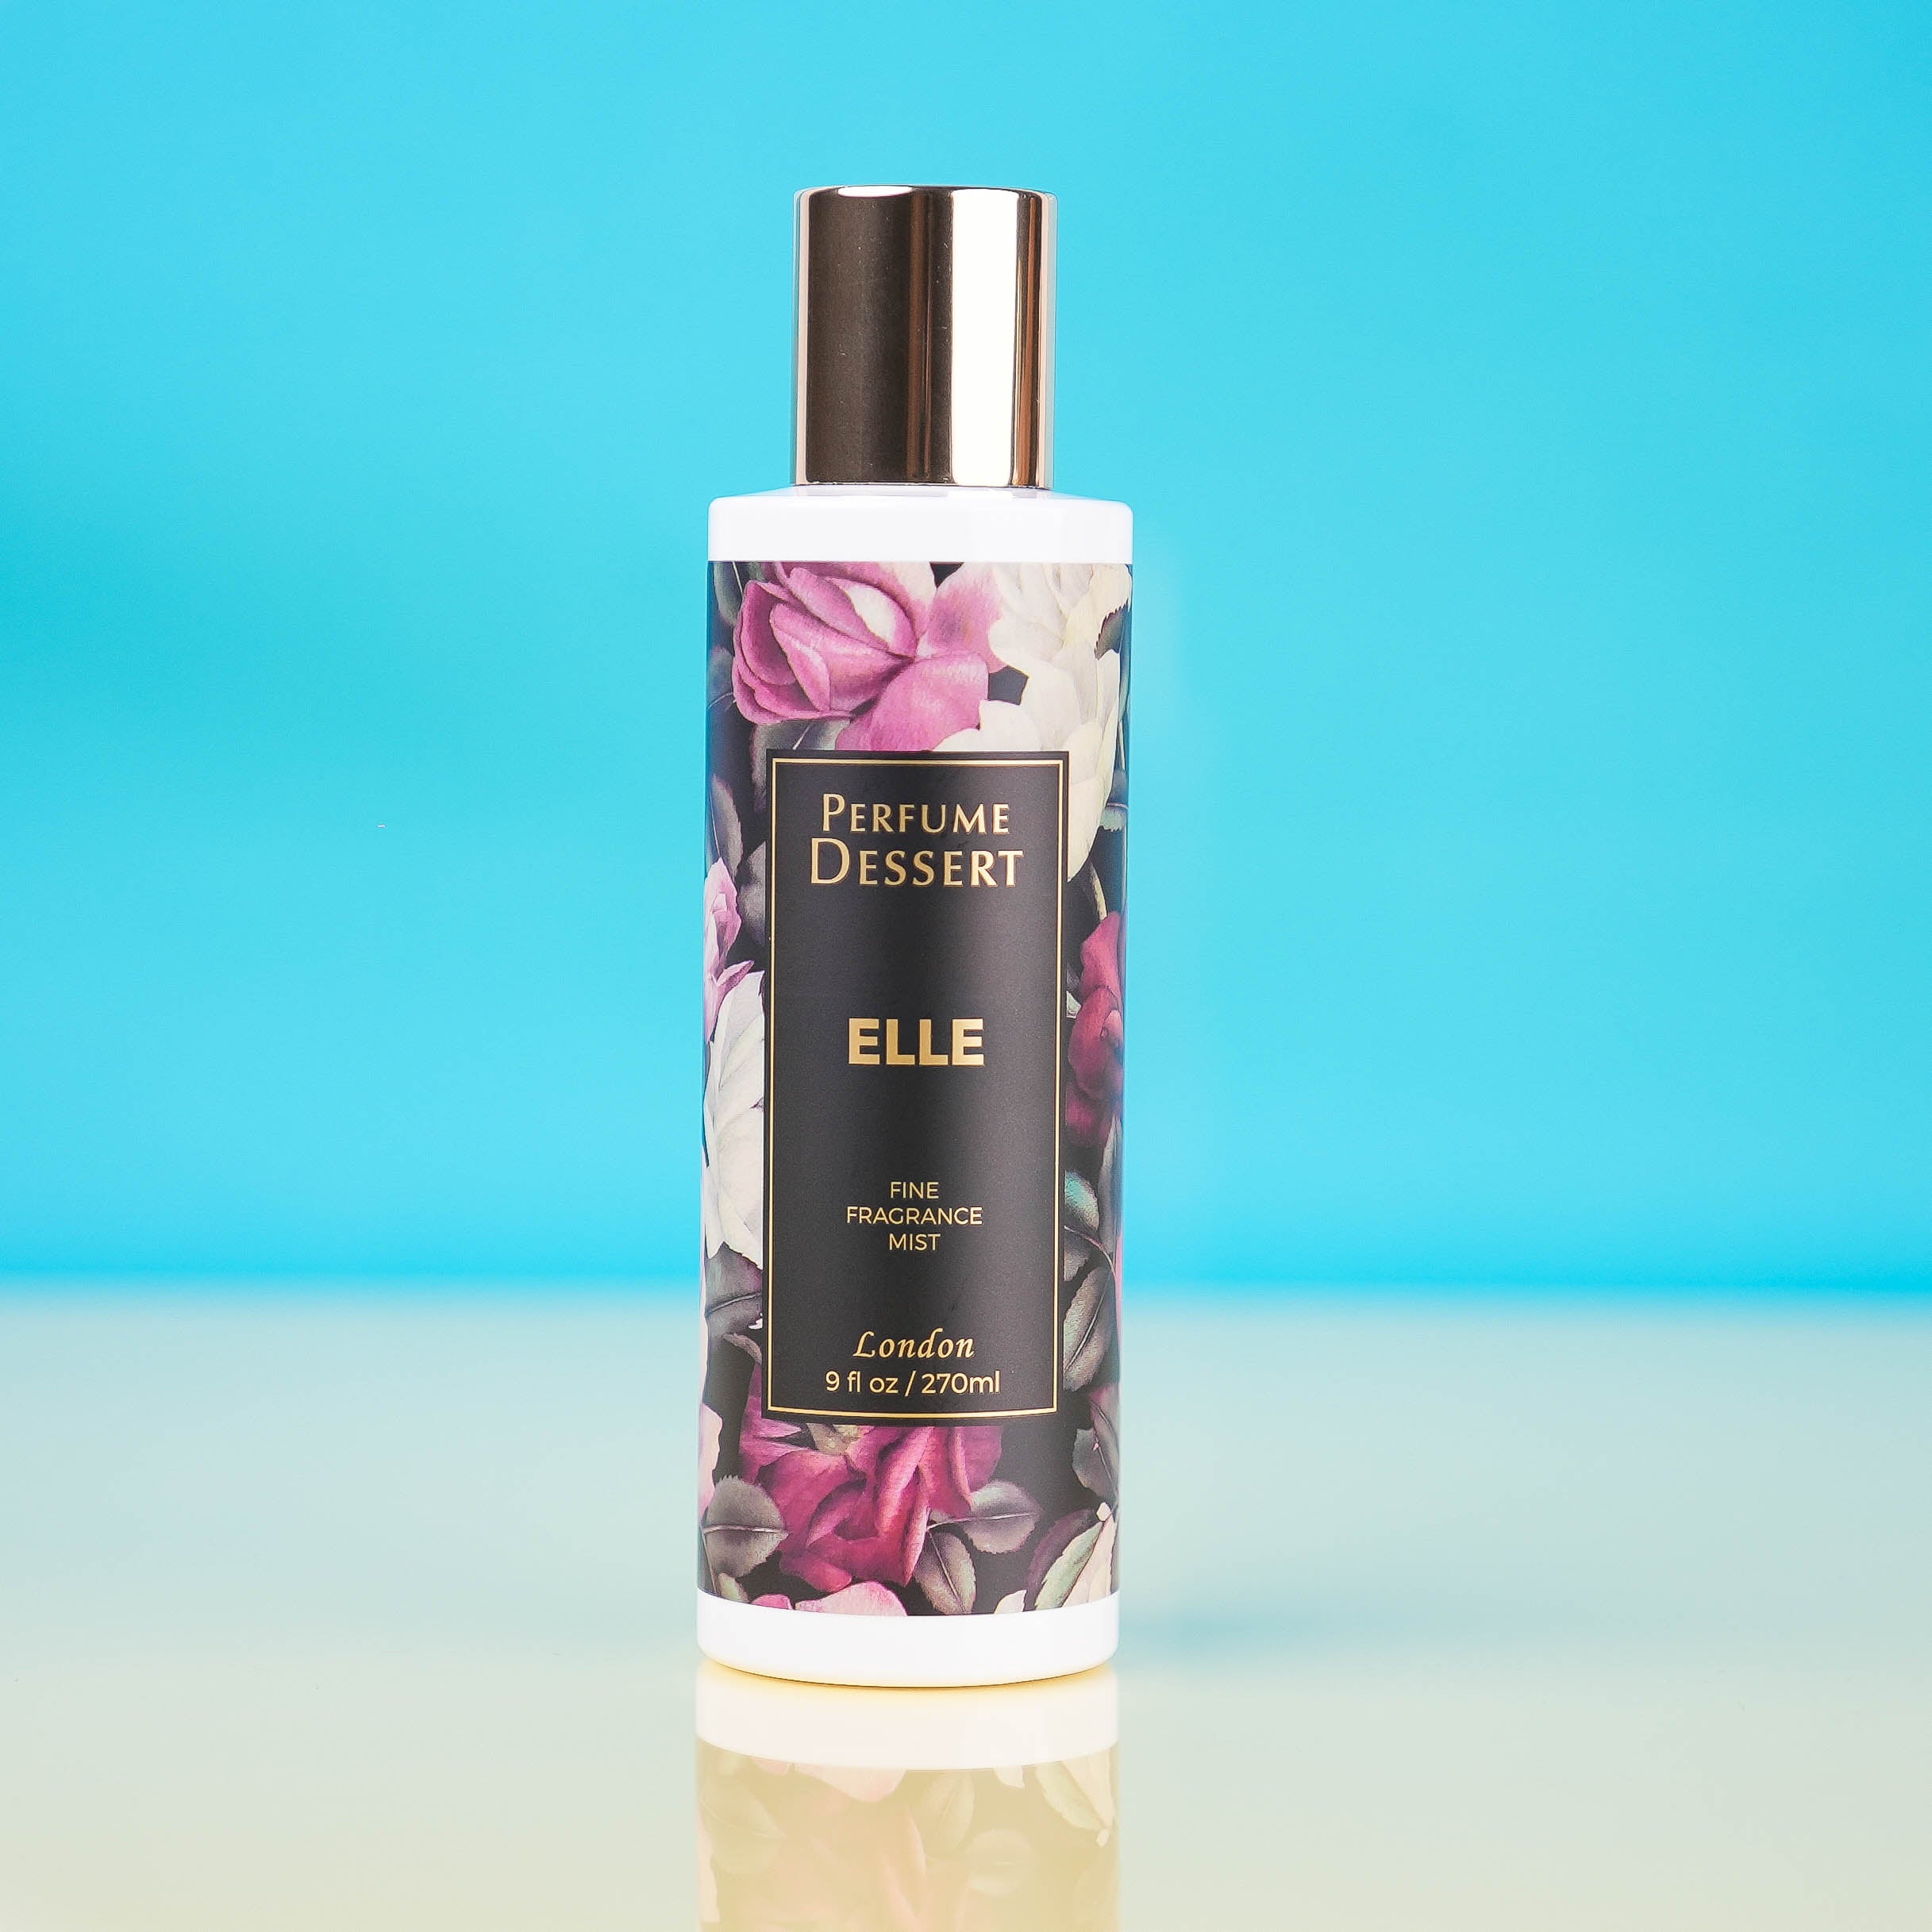 Elle - Floral Aquatic fragrance - Perfume Dessert London